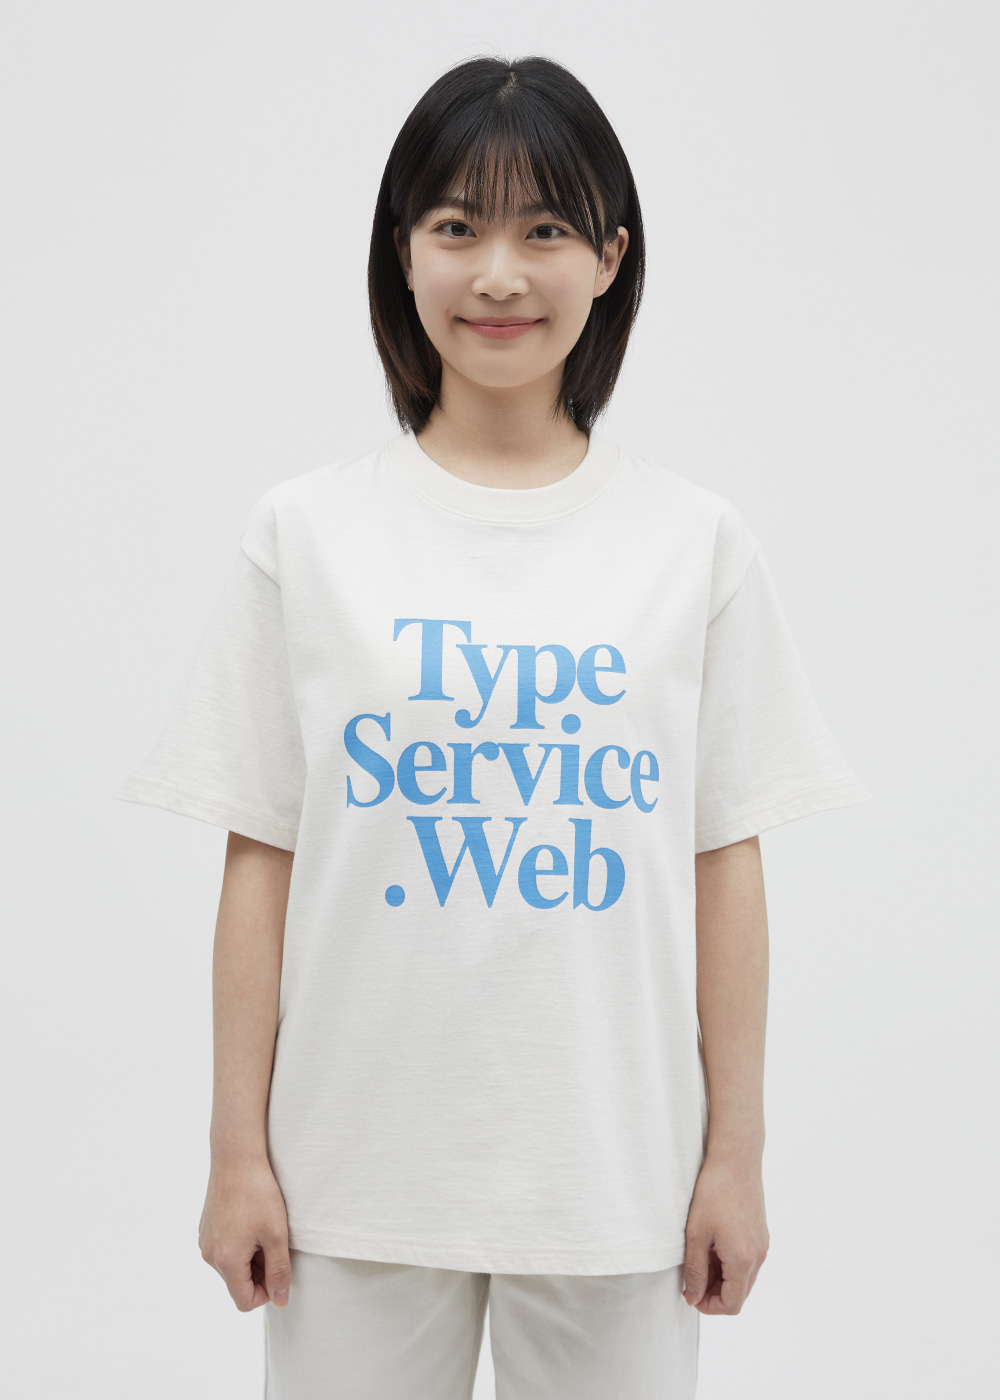 Typeservice Web T-shirt [Ivory]